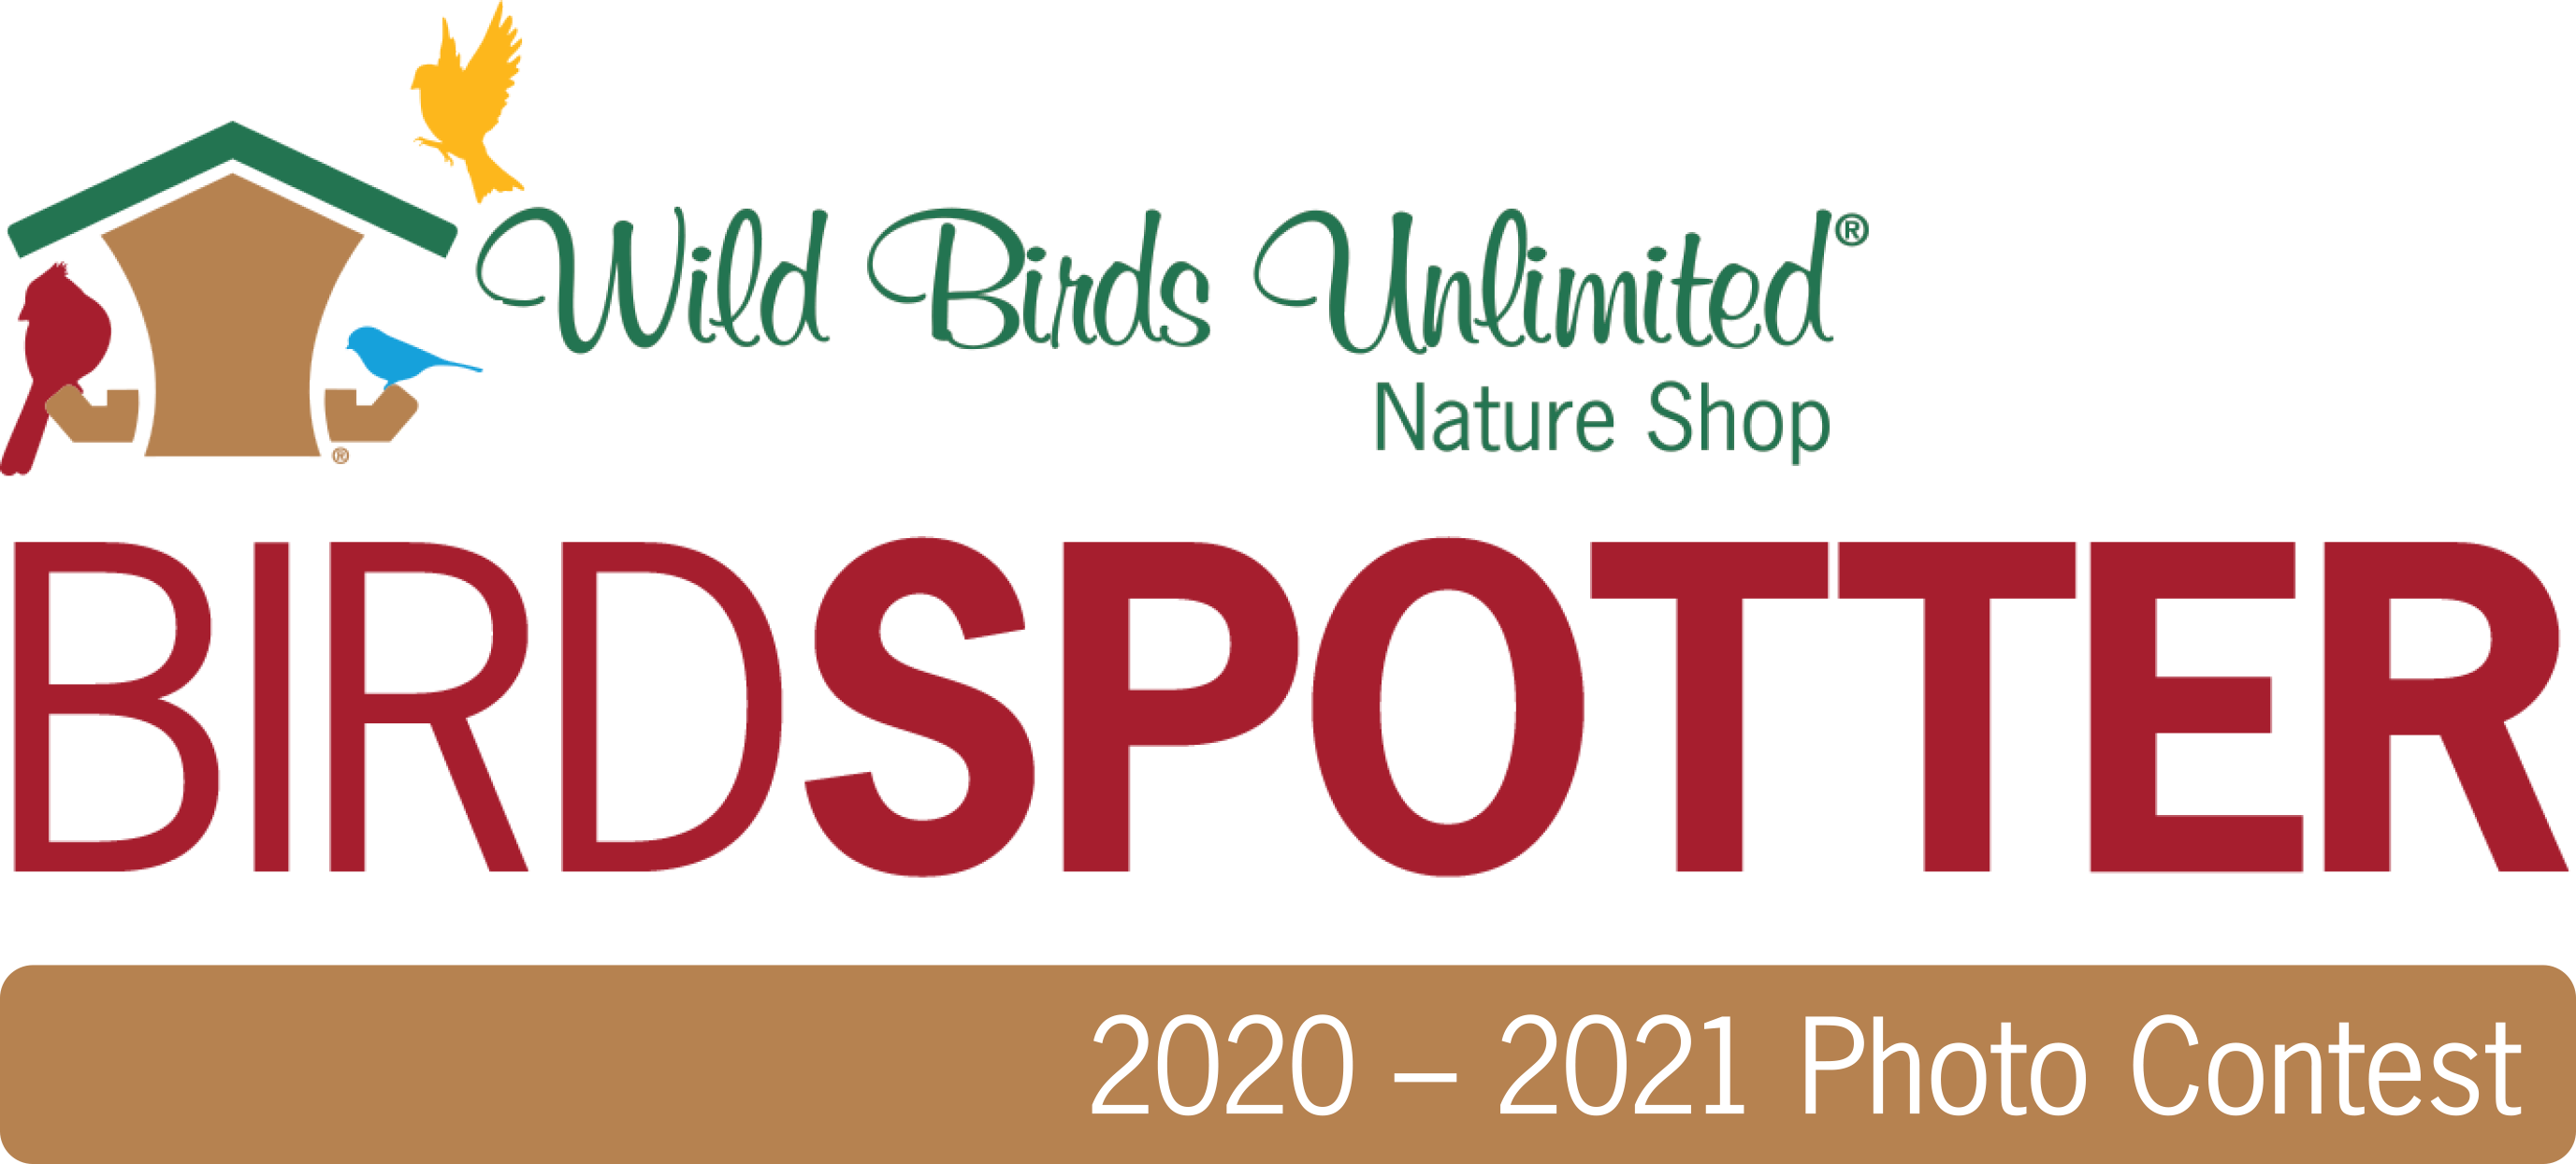 Wild Birds Unlimited - BirdSpotter 2020-21 Photo Contest